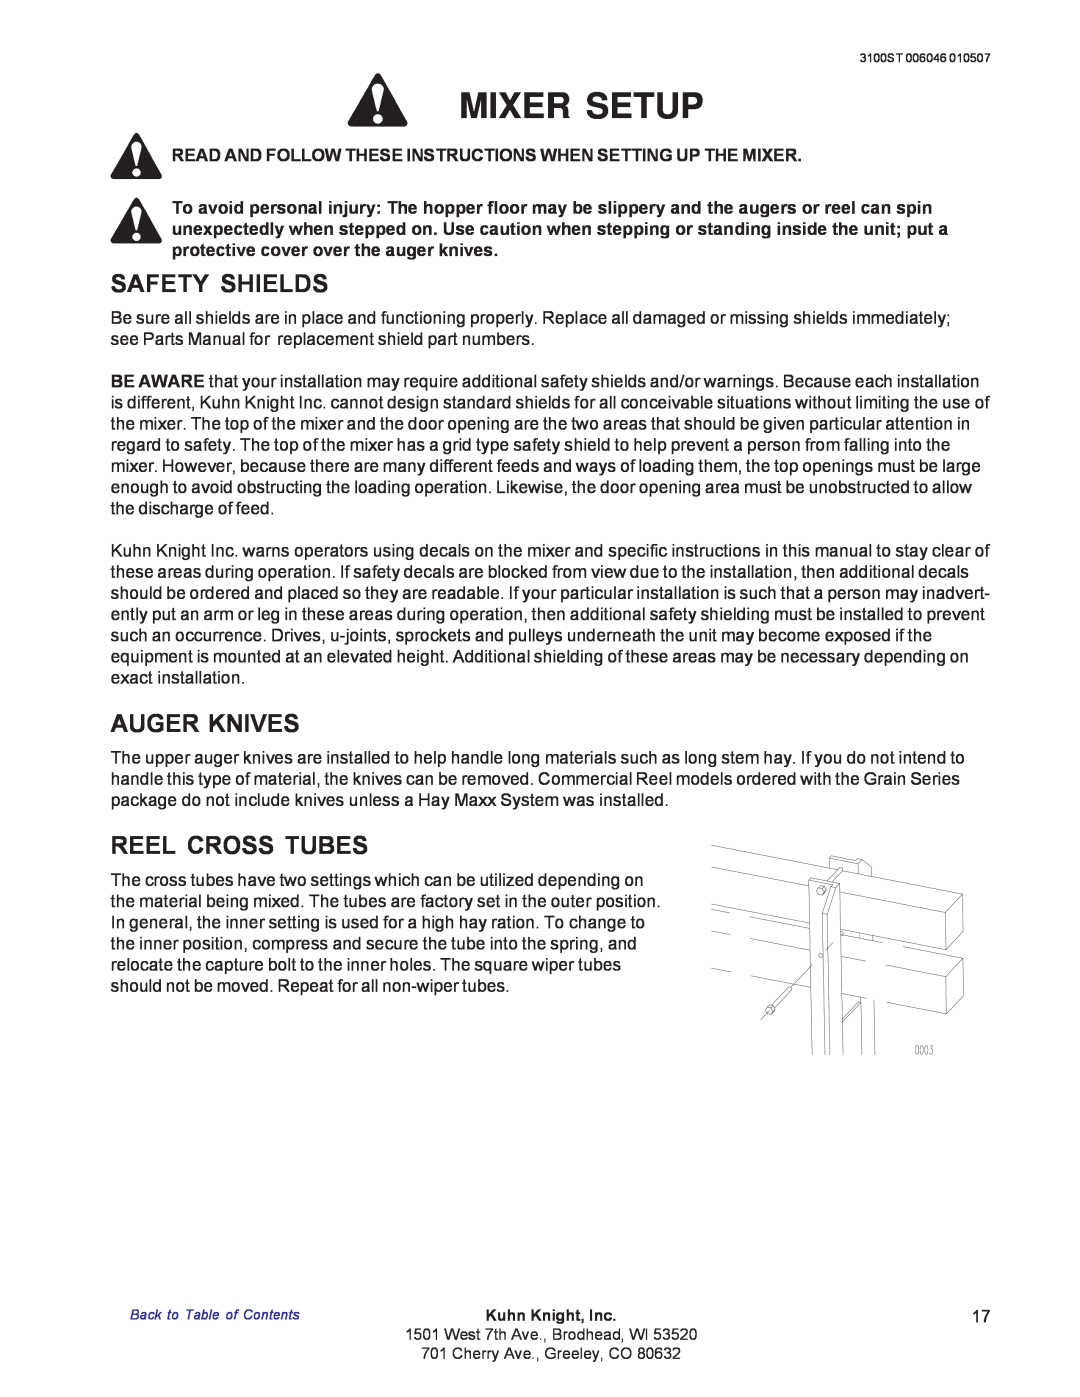 Kuhn Rikon 3100 instruction manual Safety Shields, Auger Knives, Reel Cross Tubes, Mixer Setup 